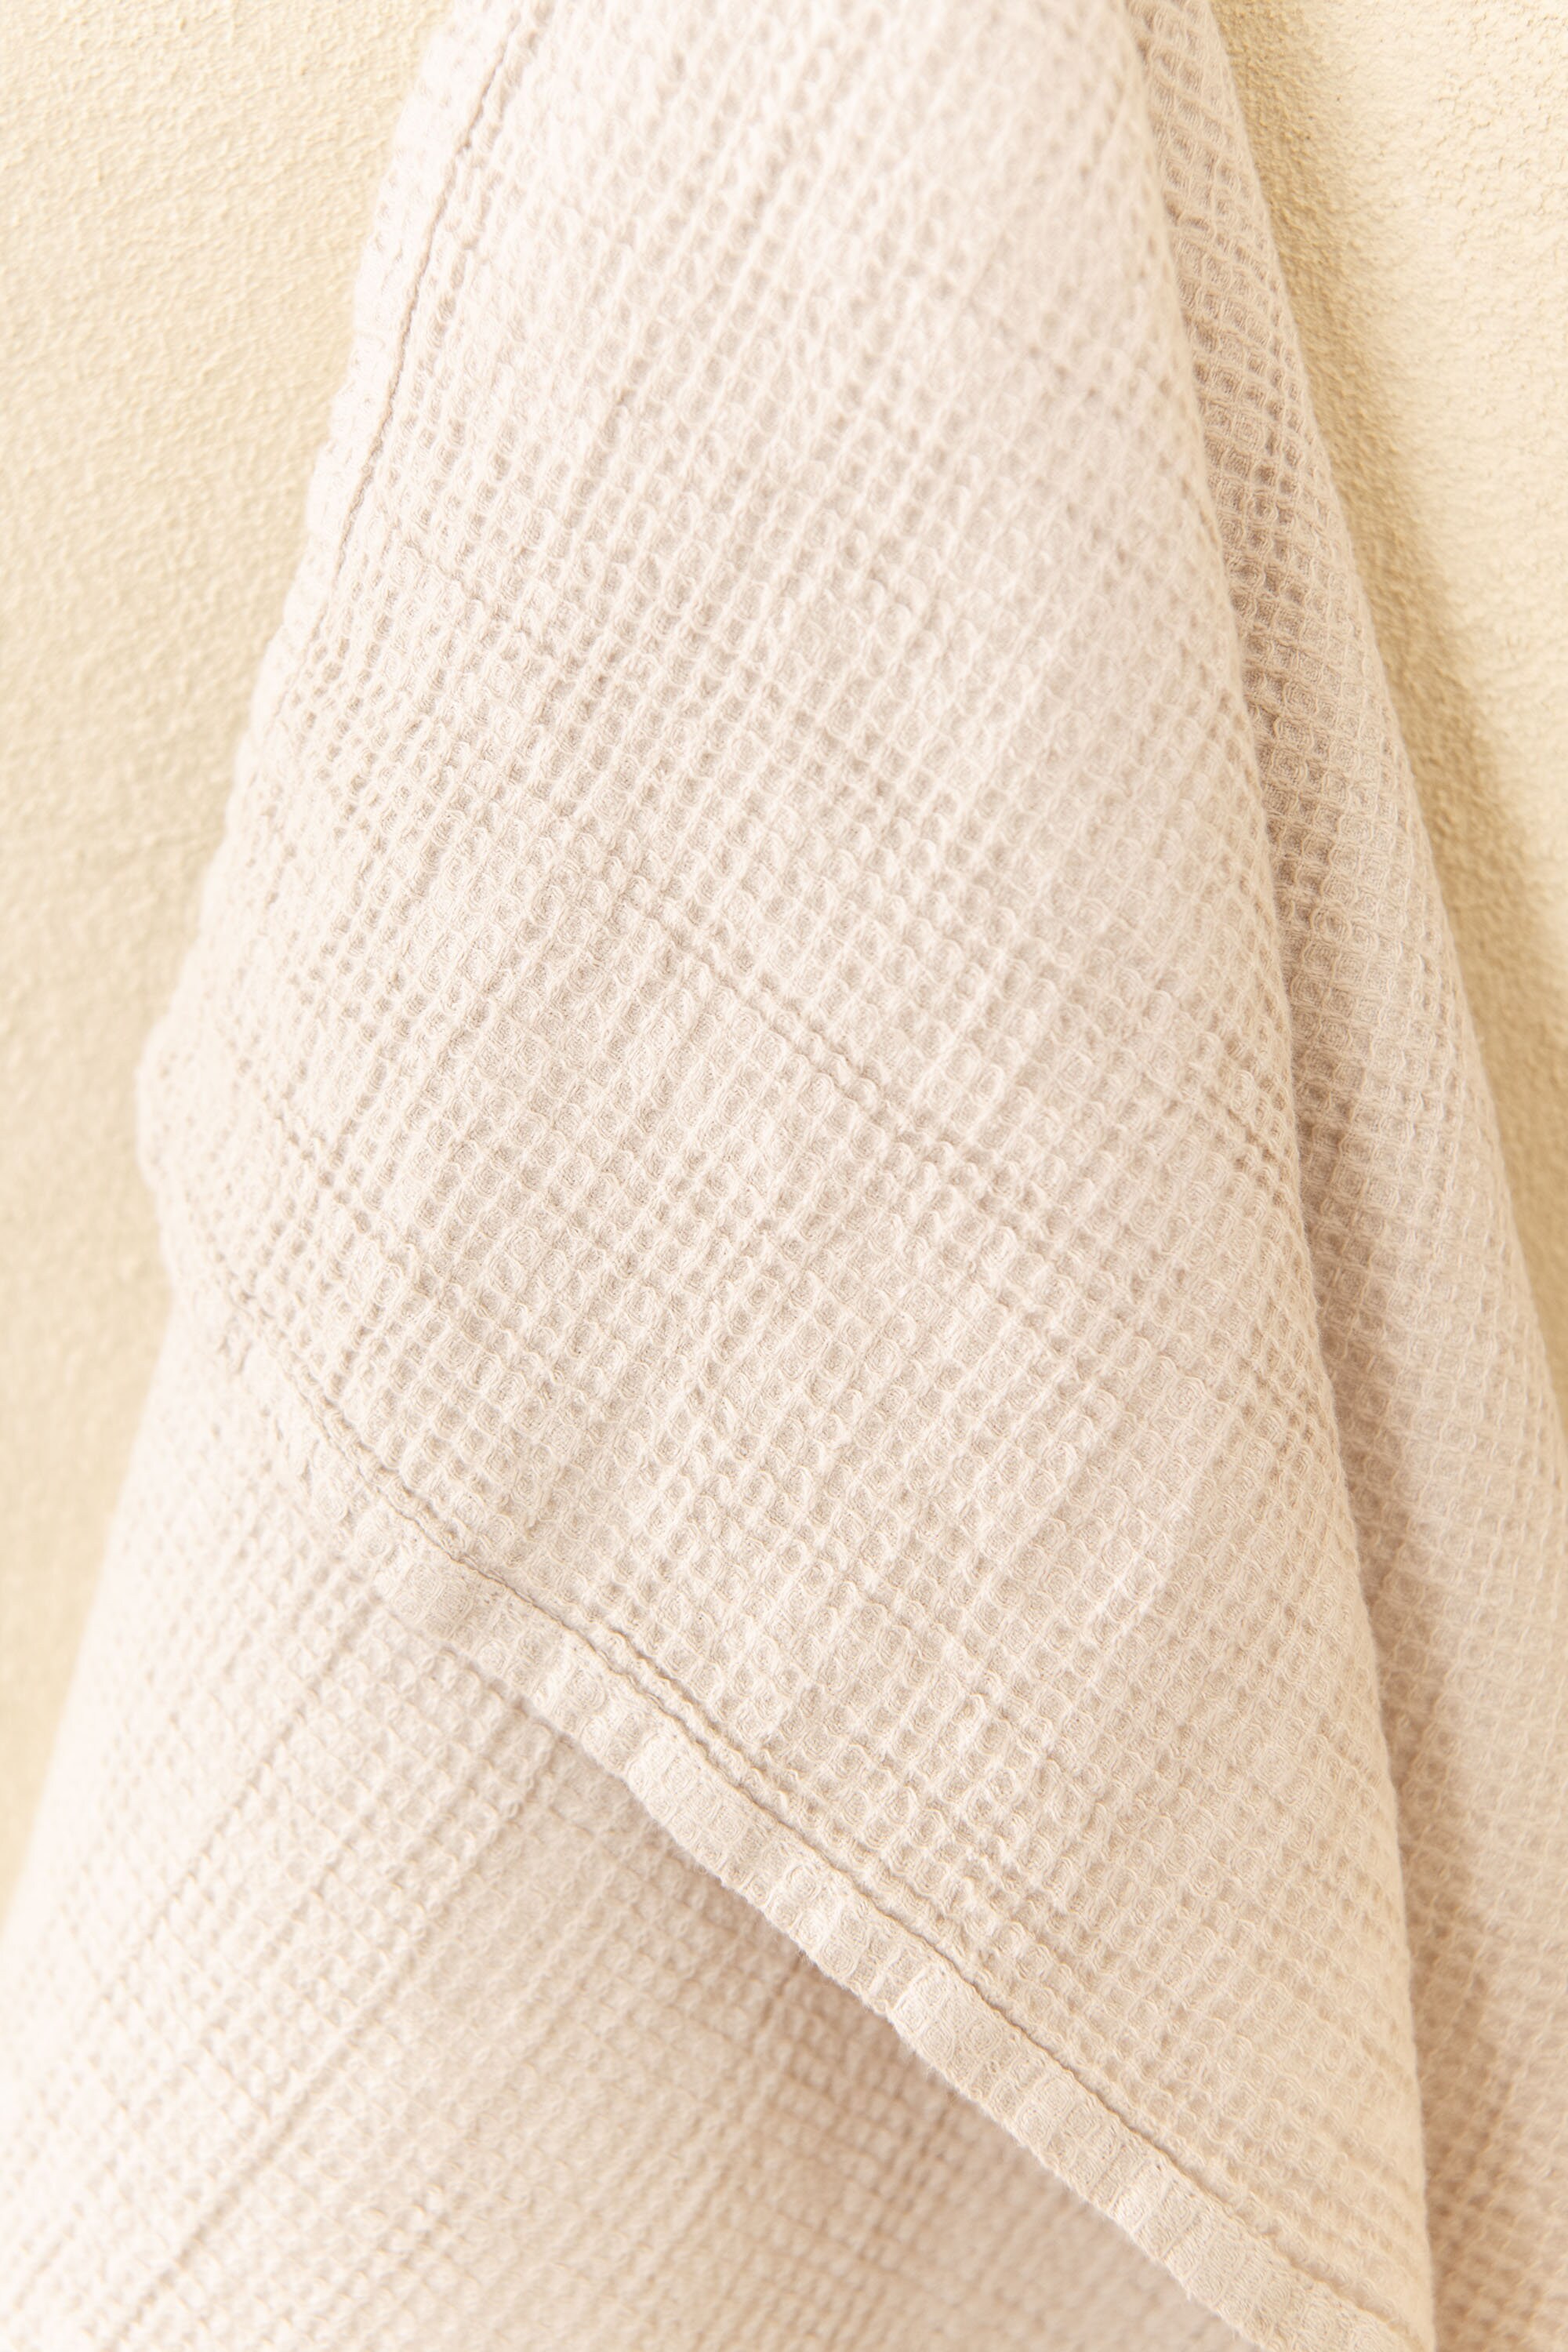 Waffle Tea Towel in Beige. Soft Linen Kitchen Towel. Hand - Etsy